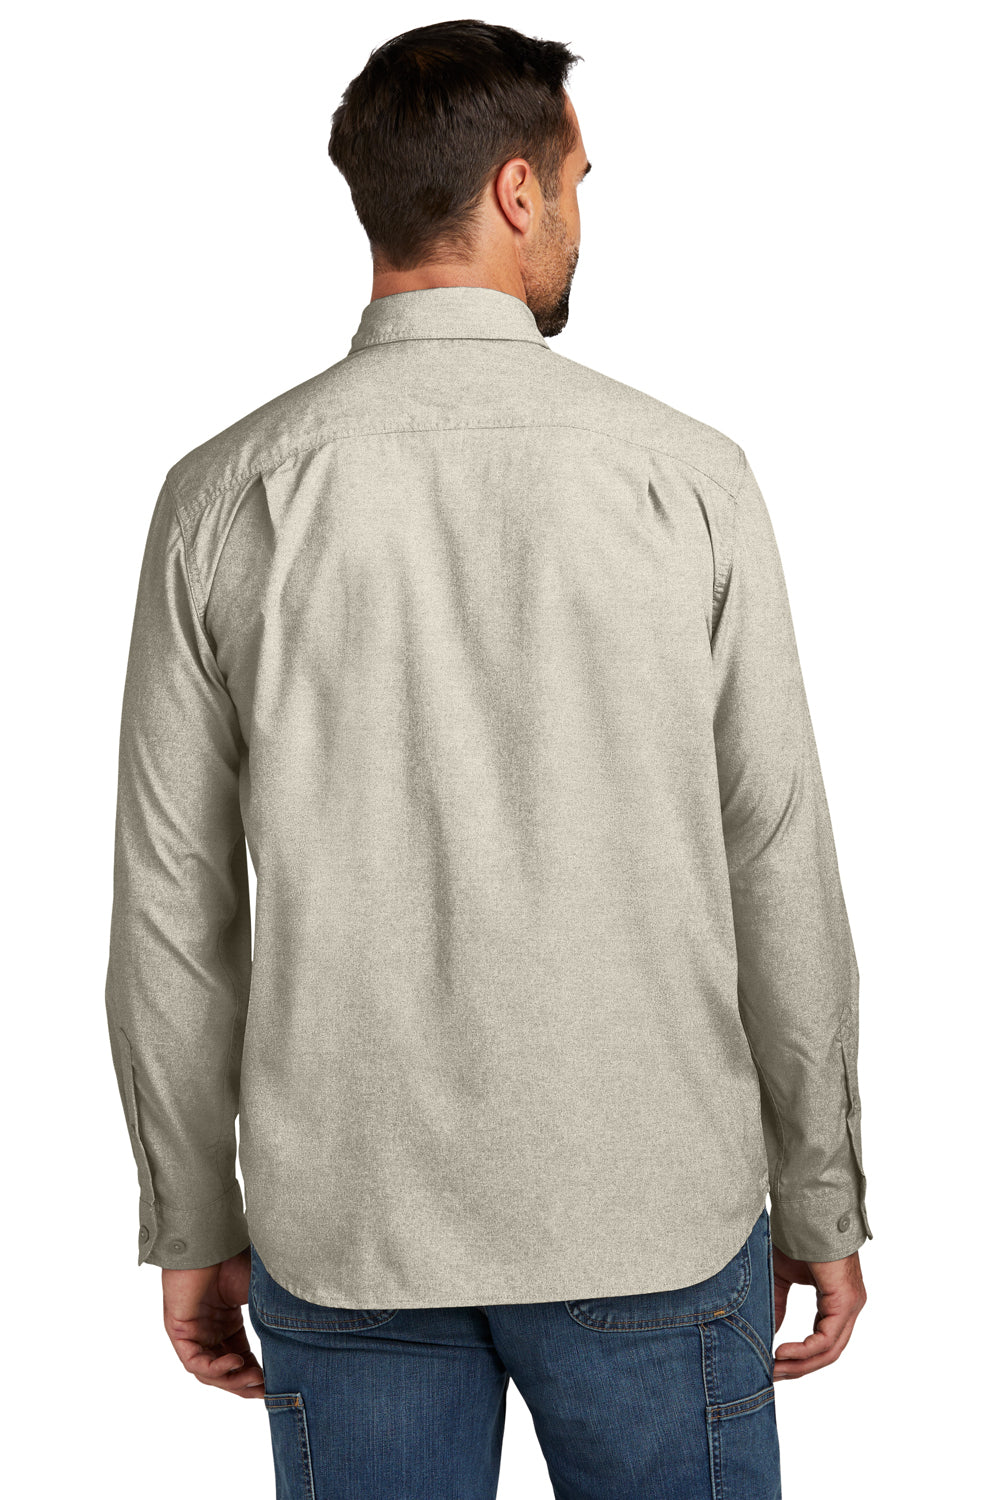 Carhartt CT105291 Mens Force Moisture Wicking Long Sleeve Button Down Shirt w/ Double Pockets Steel Grey Model Back